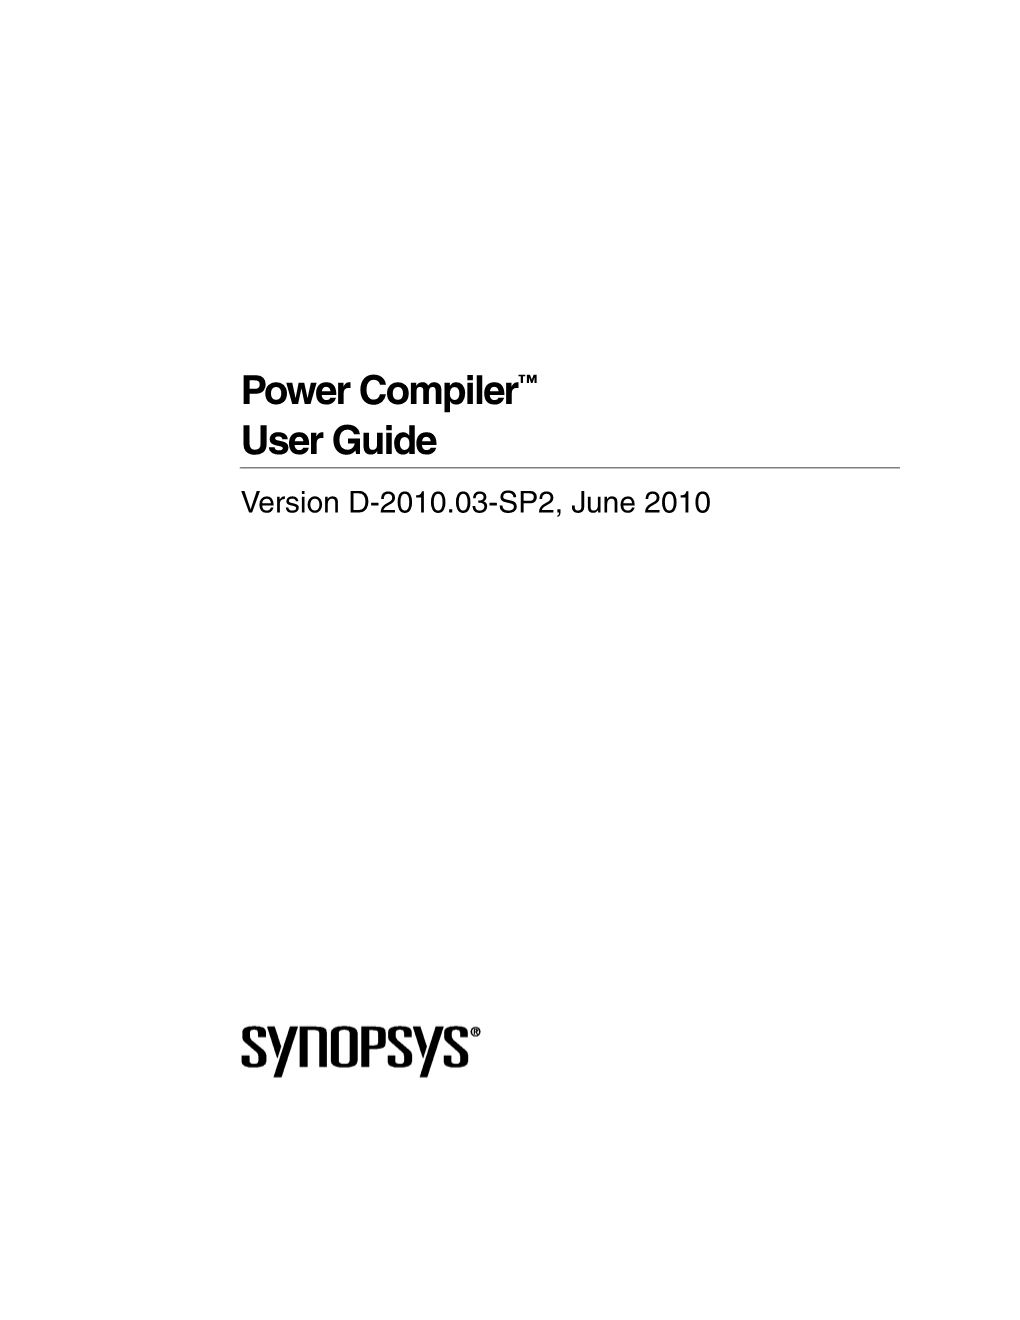 Power Compiler User Guide, Version D-2010.03-SP2 Ii Contents